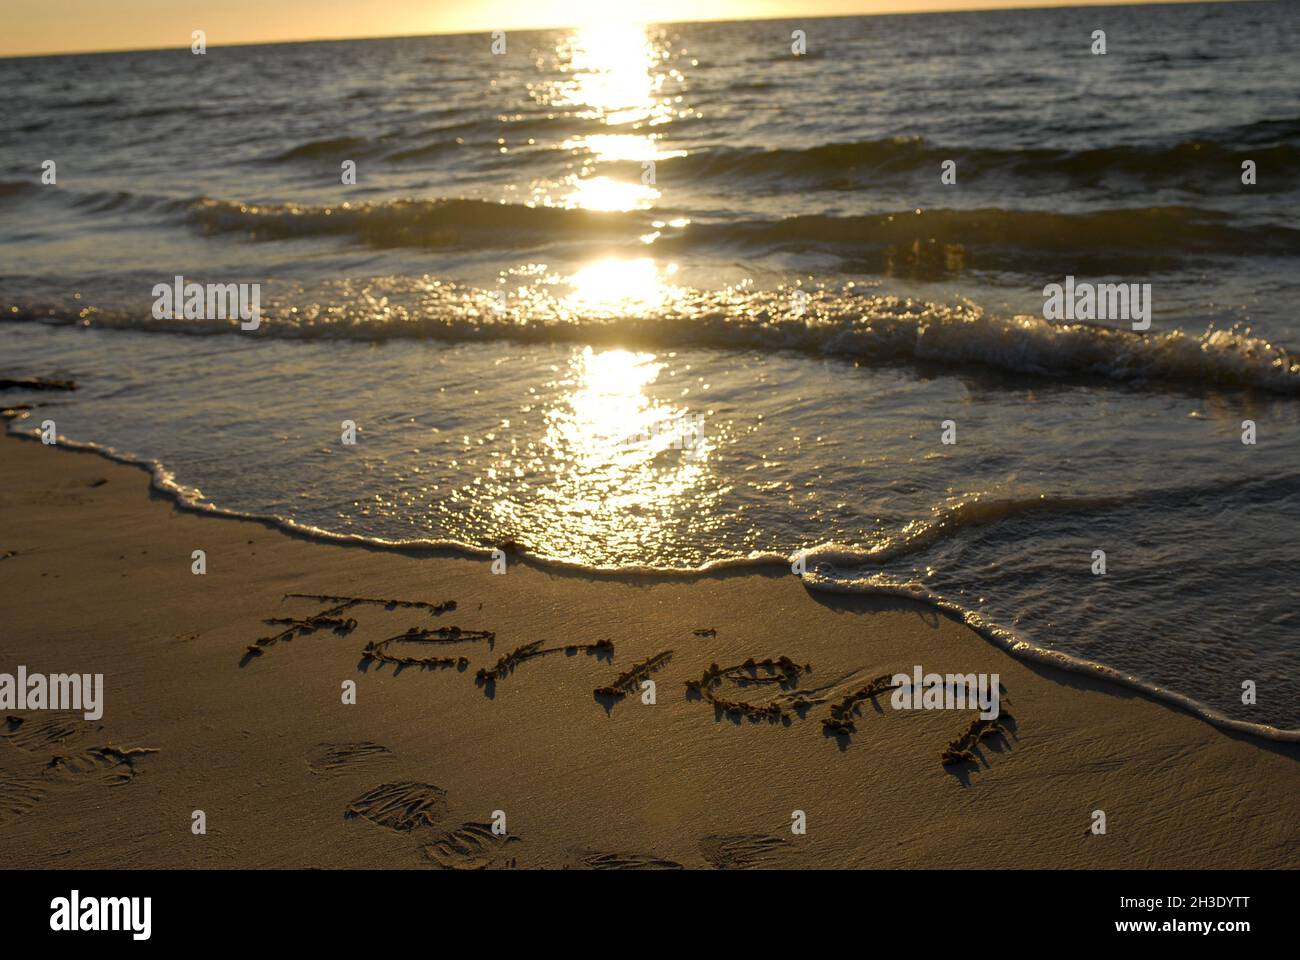 writing 'Ferien' (vacation) on the beach, Australia Stock Photo